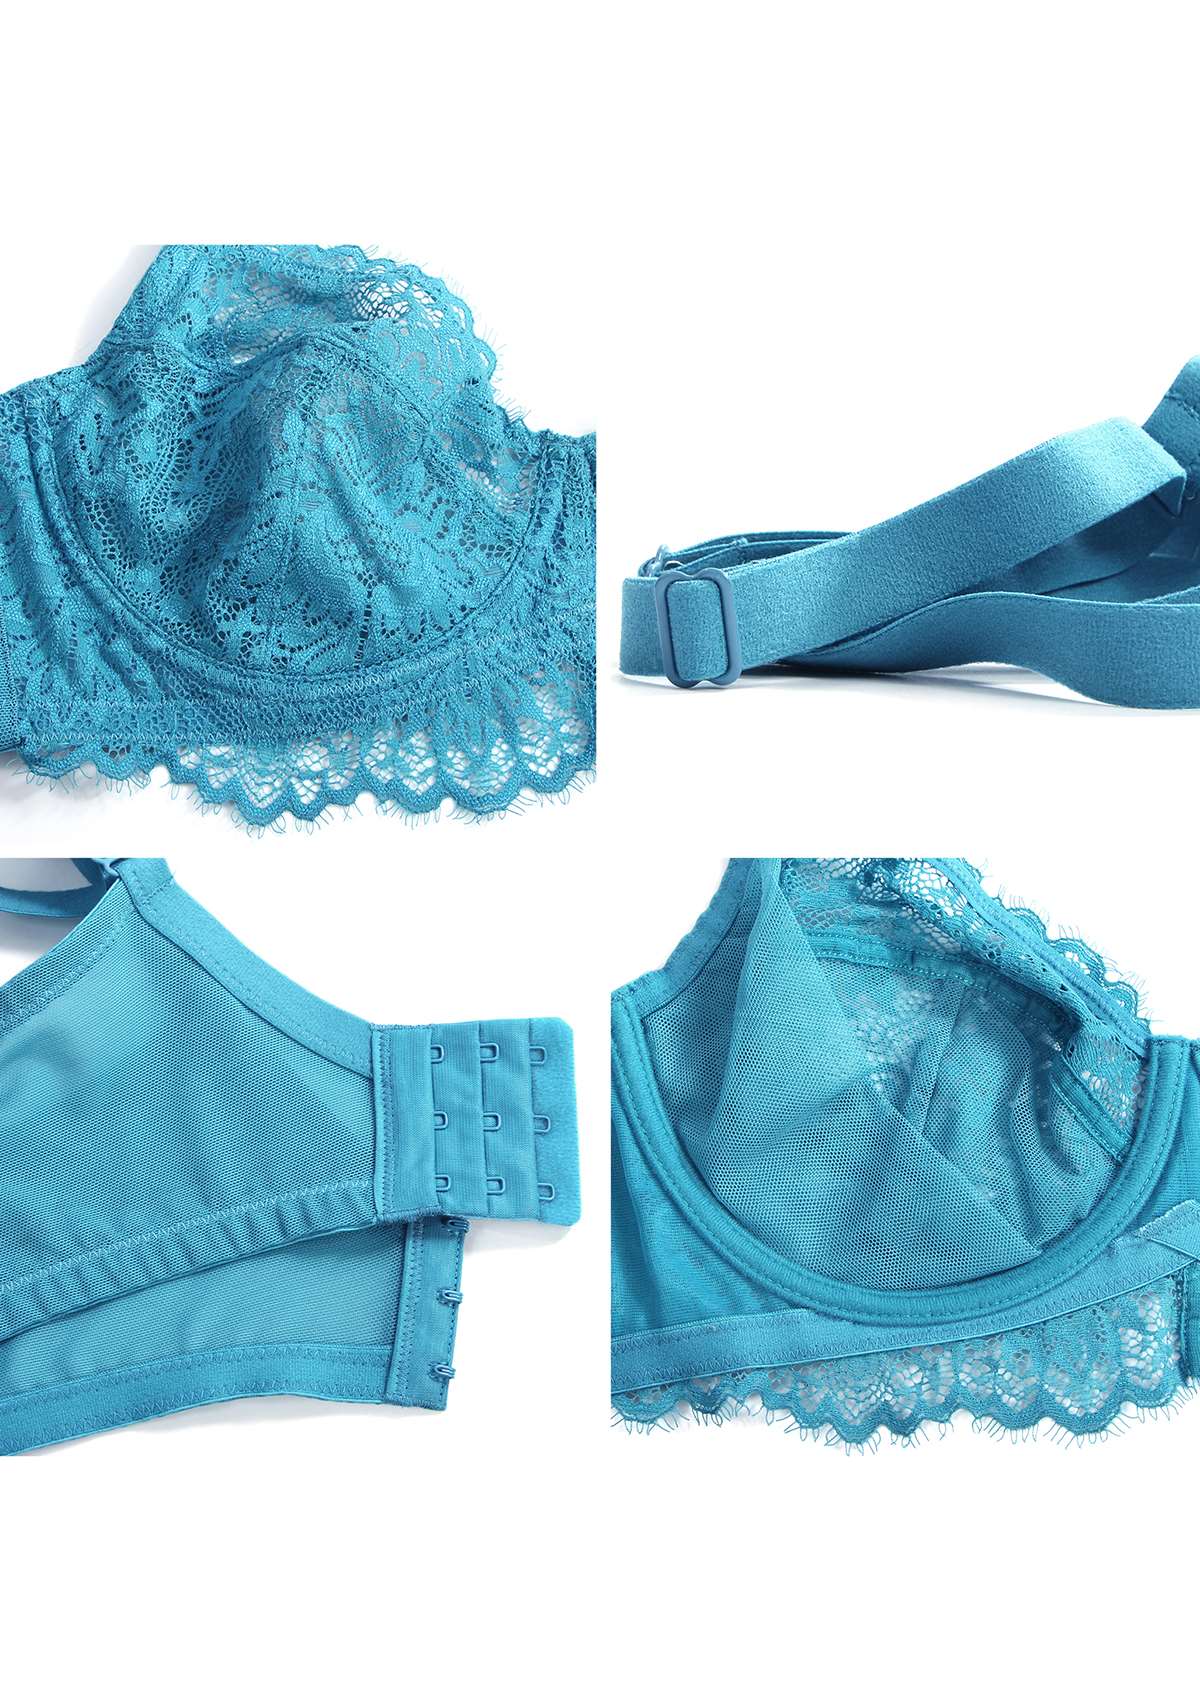 HSIA Sunflower Lace Bra And Panty: Cute Plus Size Comfort Bra - Horizon Blue / 36 / G